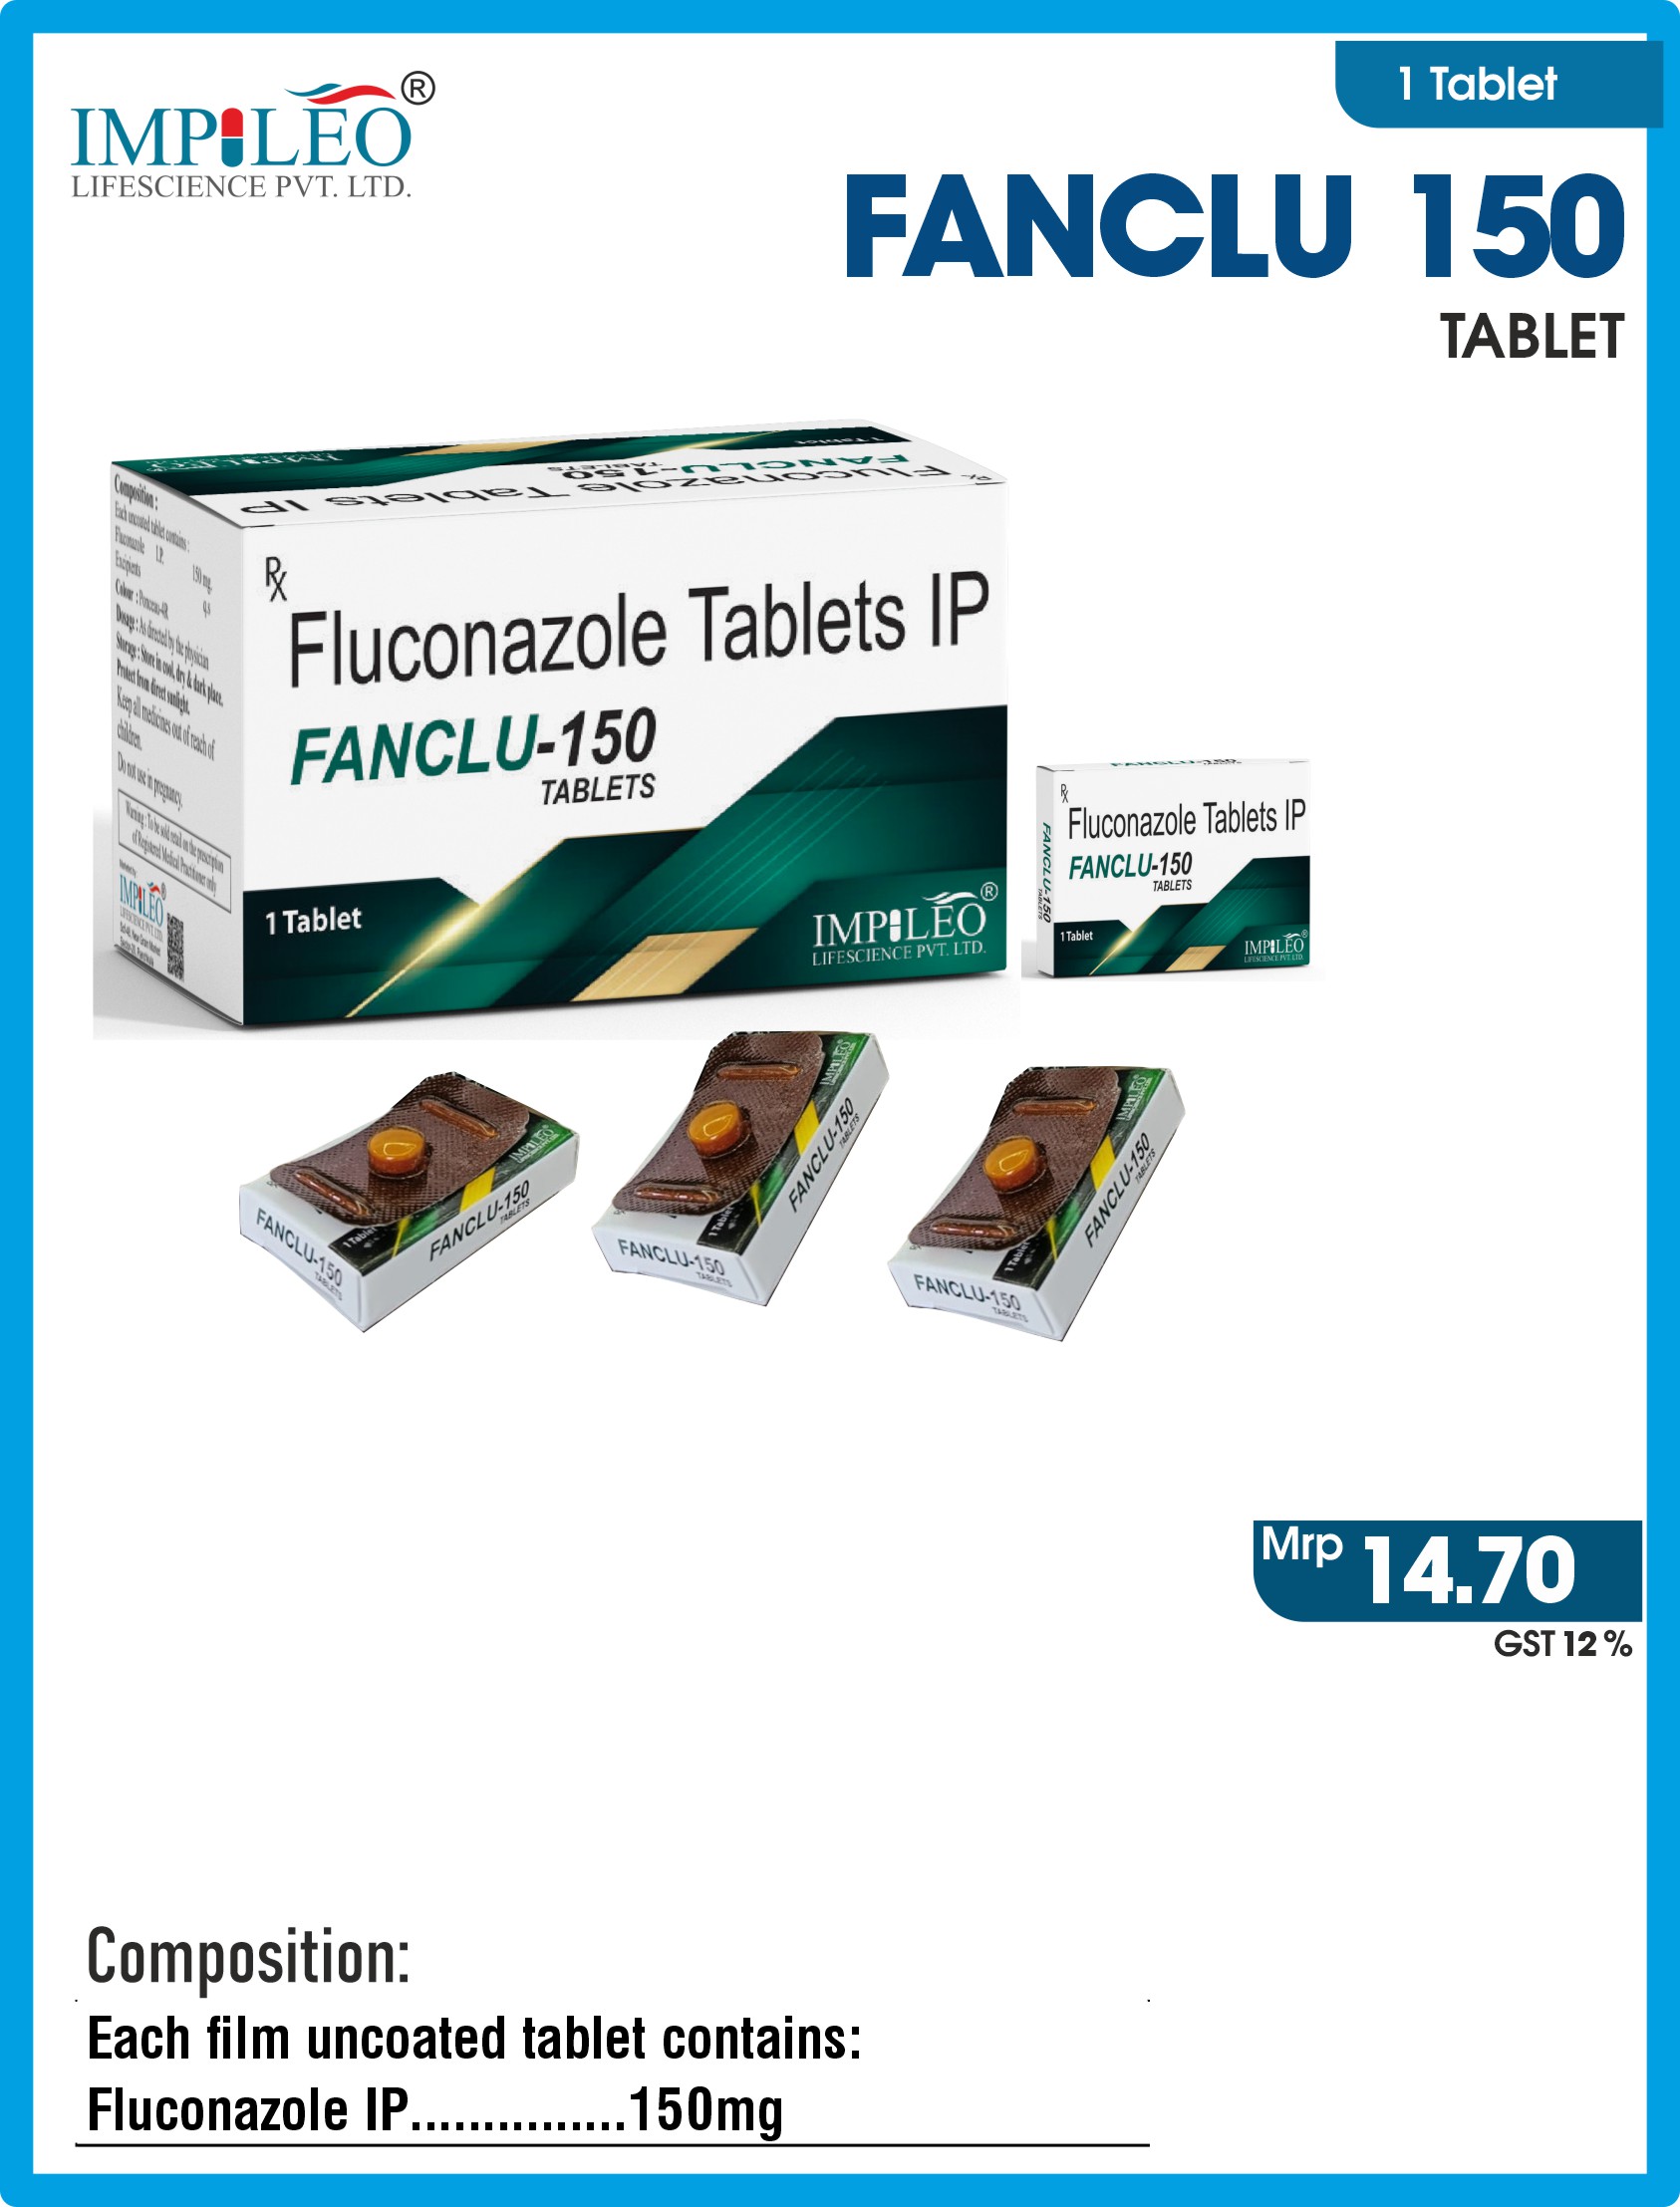 Best PCD Pharma Franchise For Fluconazole Tablets